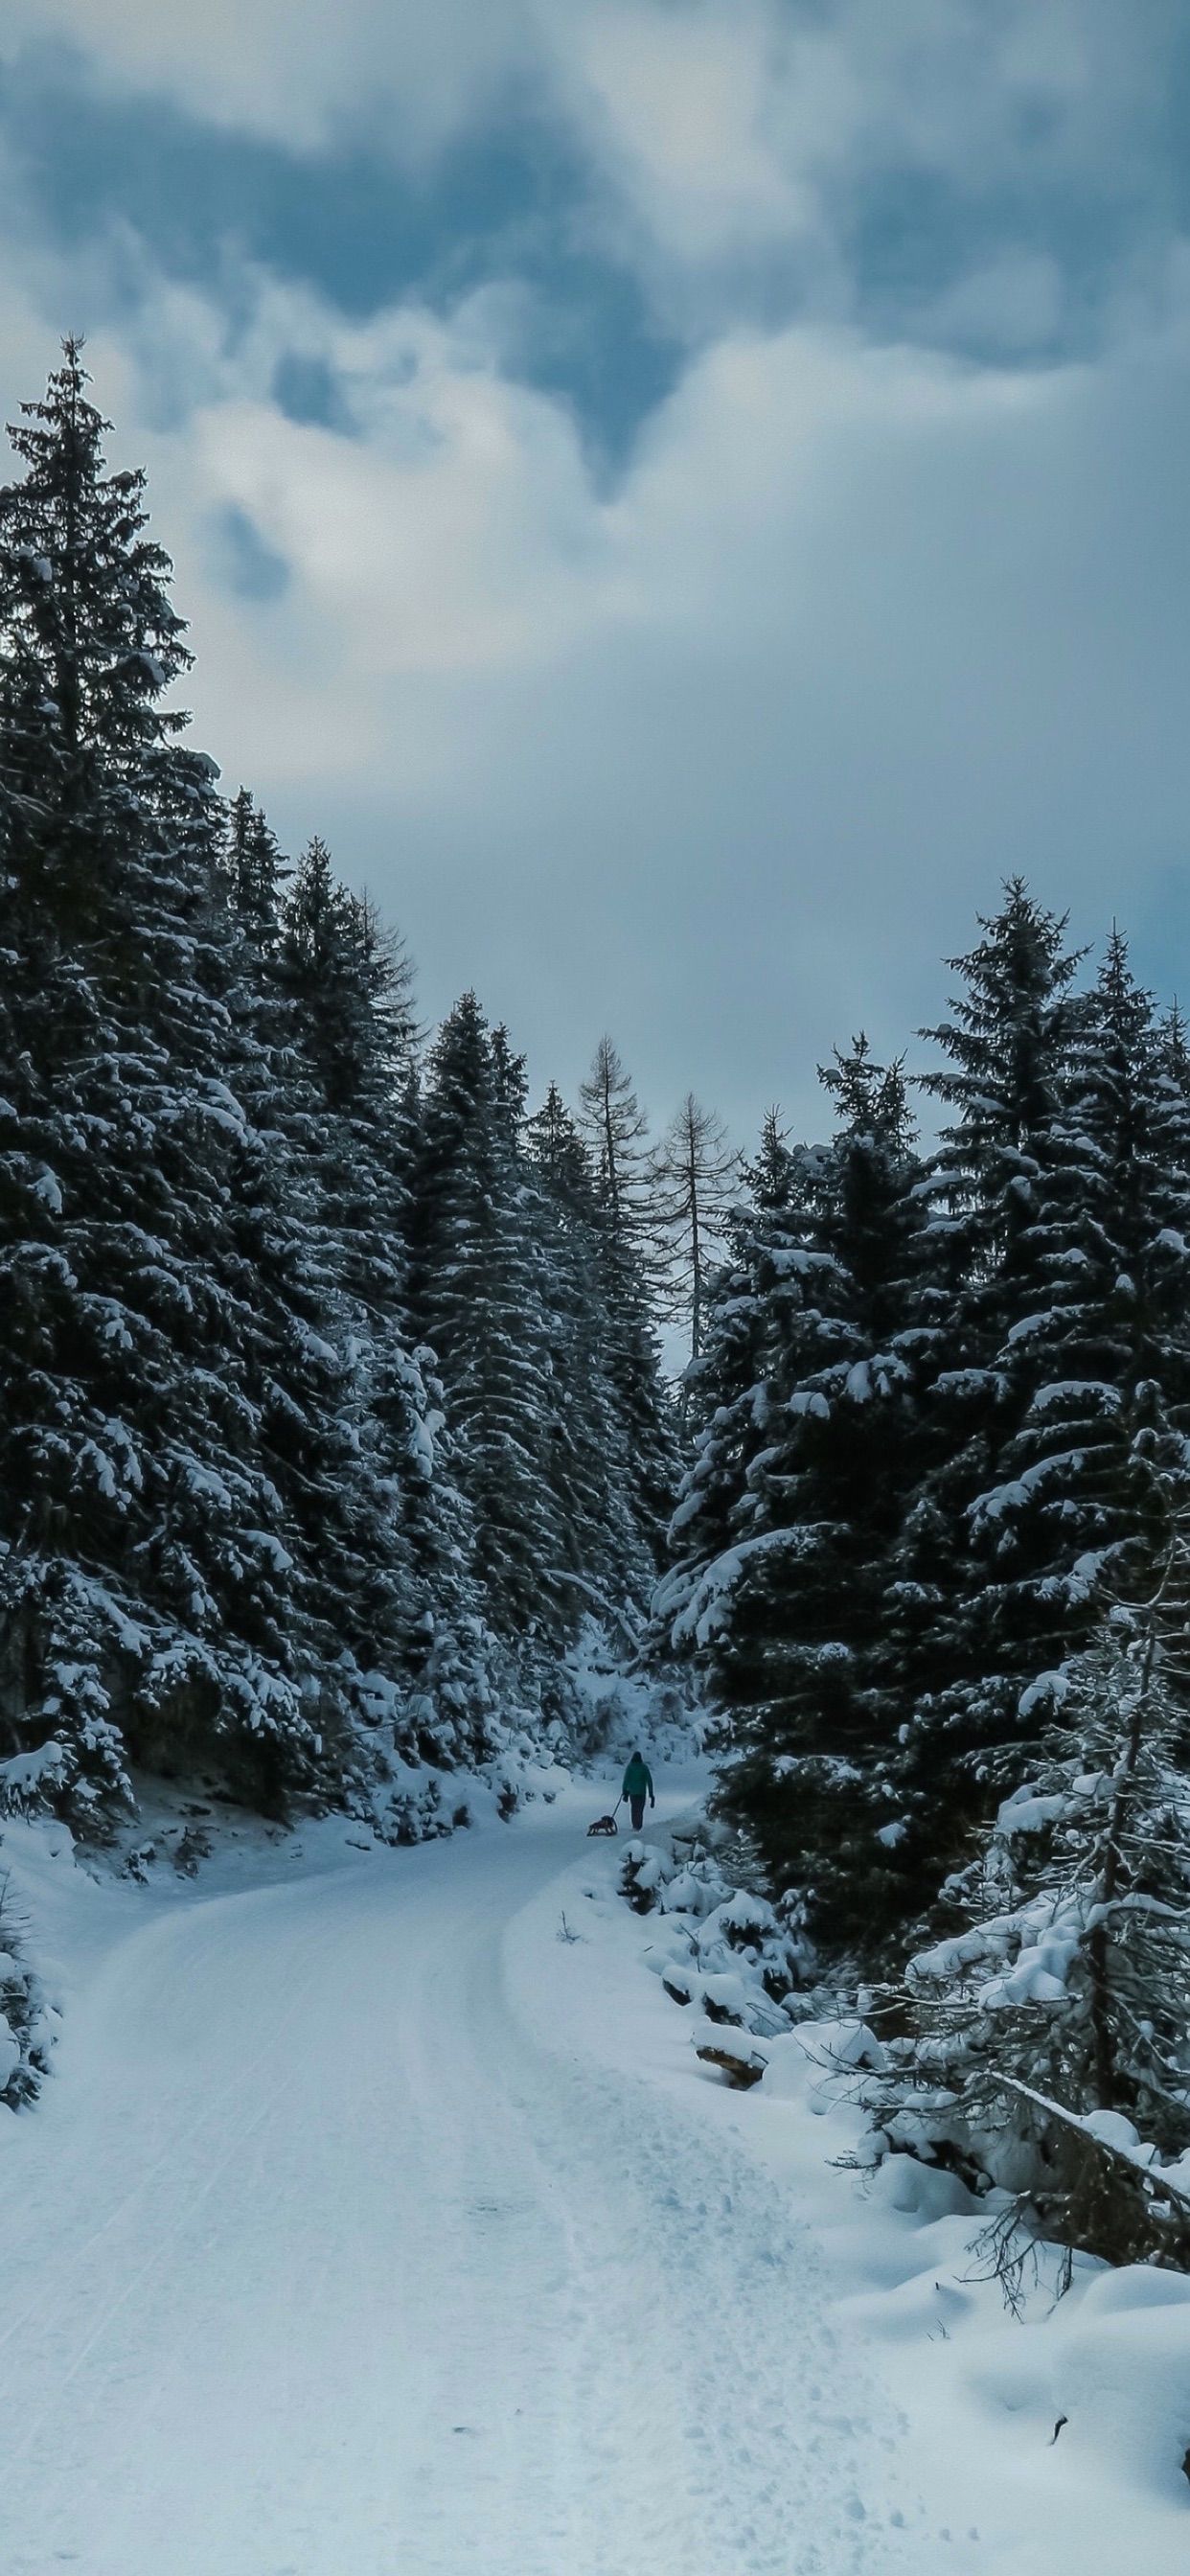 Winter Snow Forest - Free photo on Pixabay - Pixabay